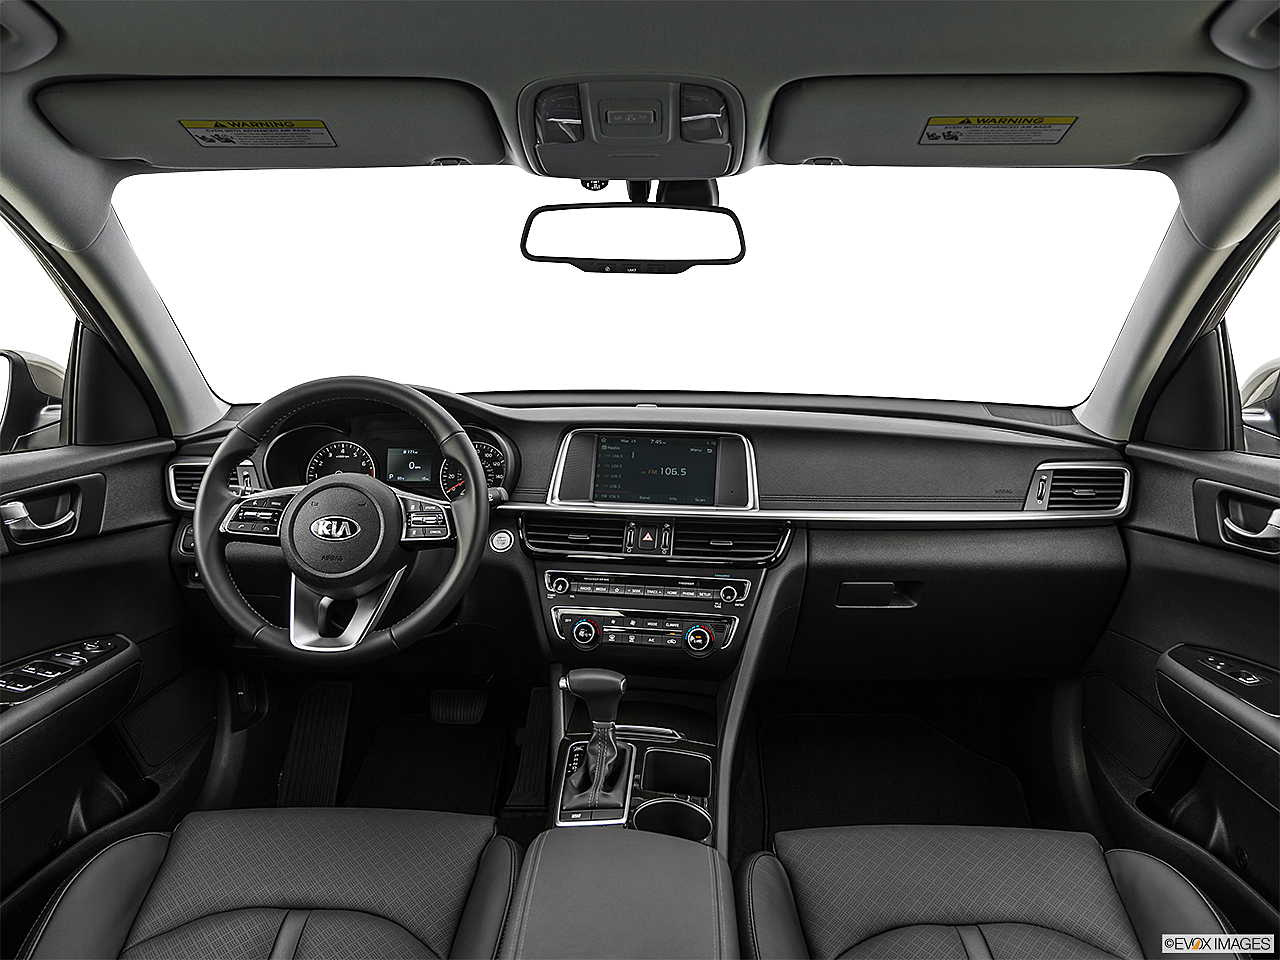 2019 Kia Optima S 4dr Sedan - Research - GrooveCar